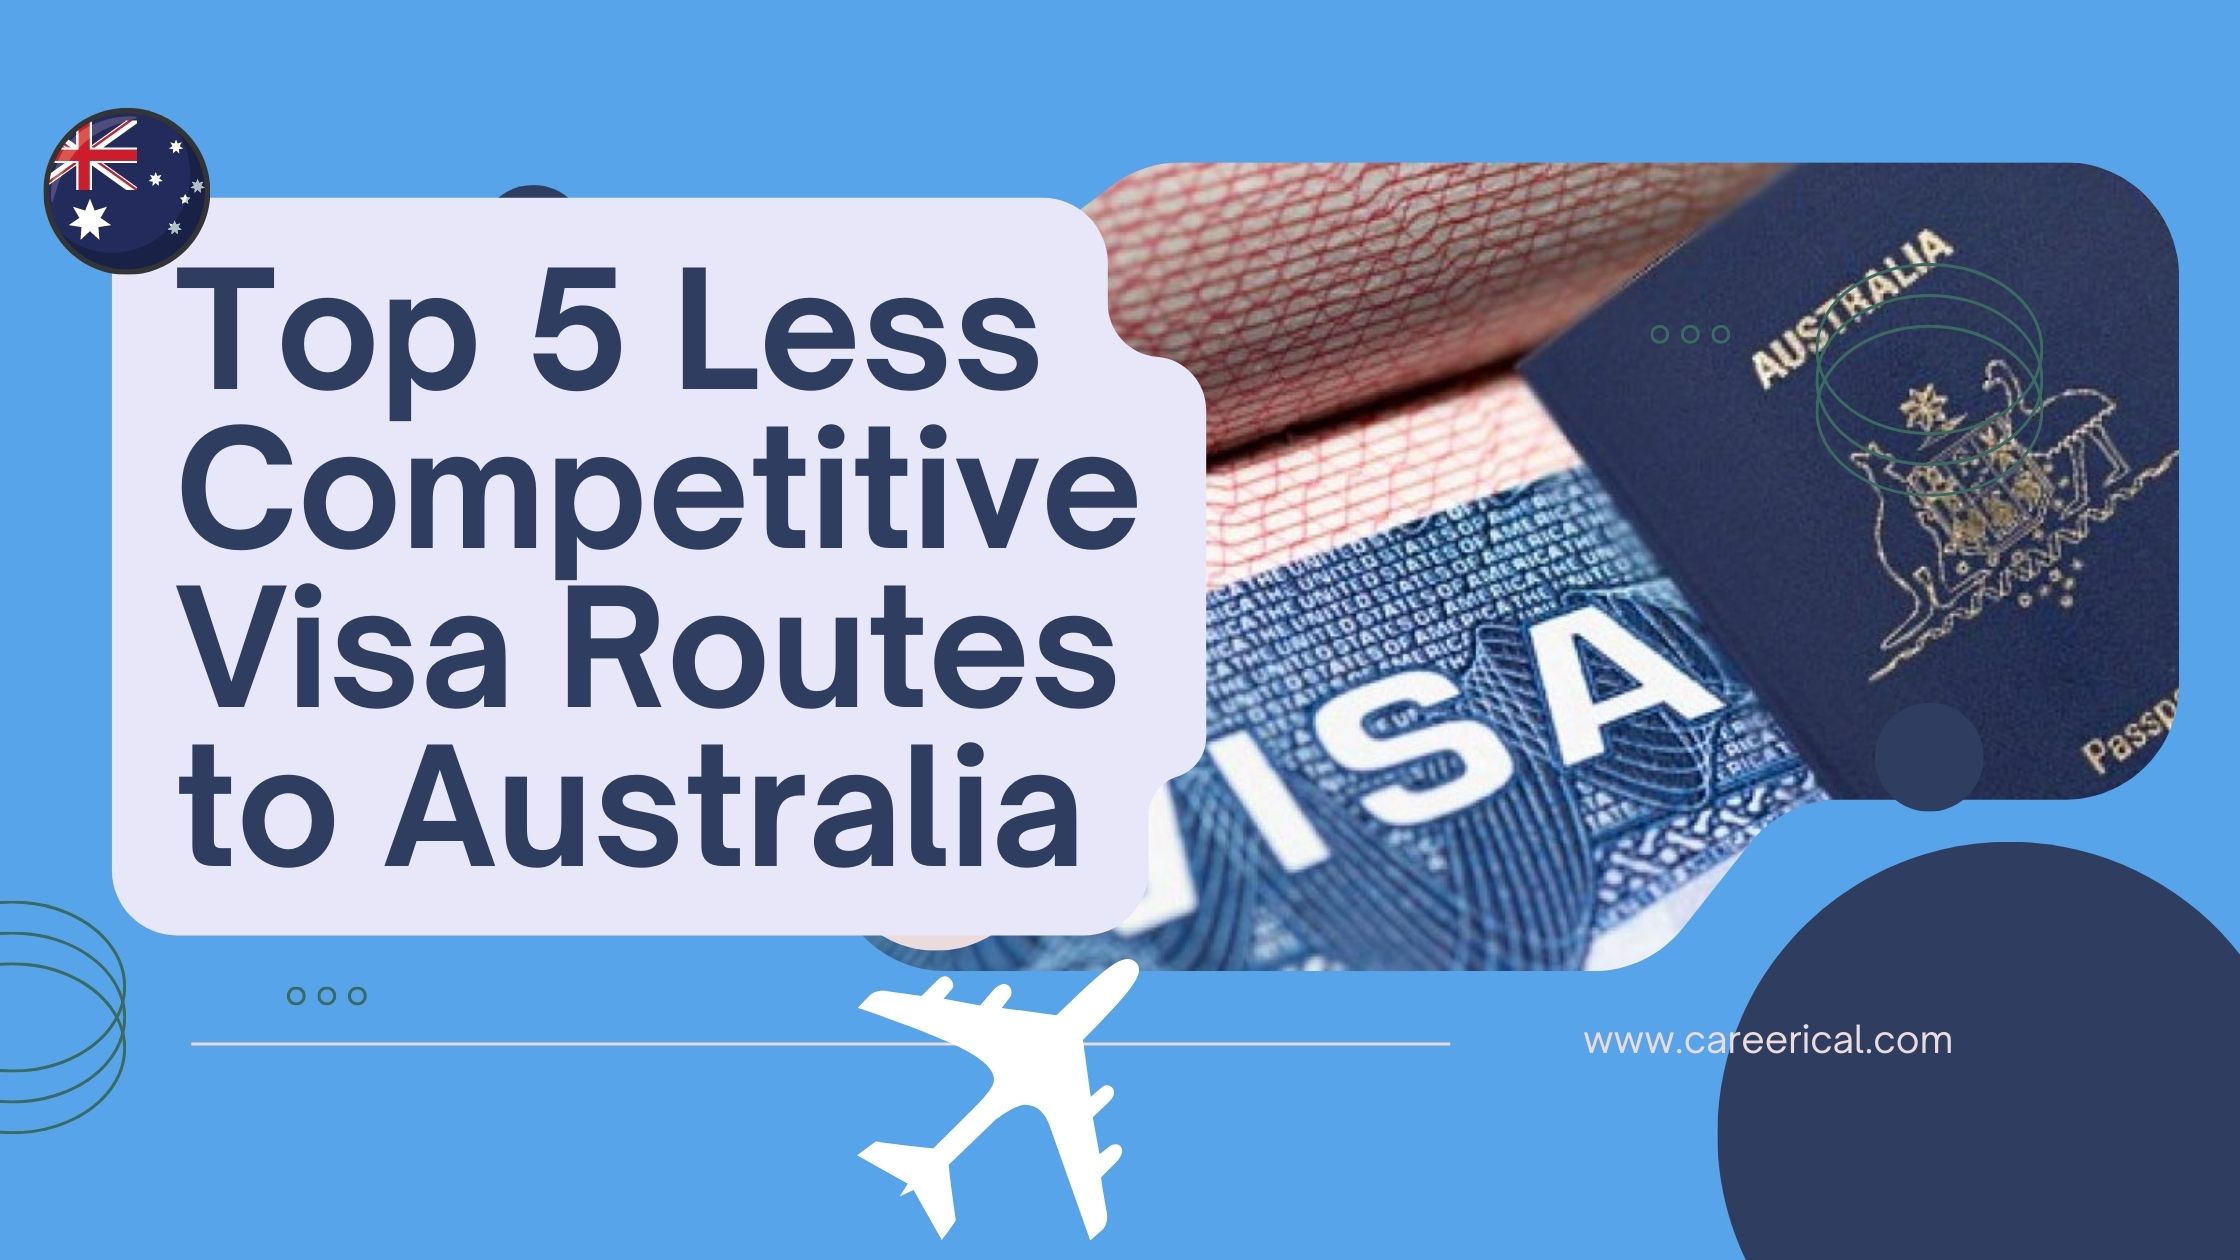 Top 5 Less Competitive Visa Routes to Australia